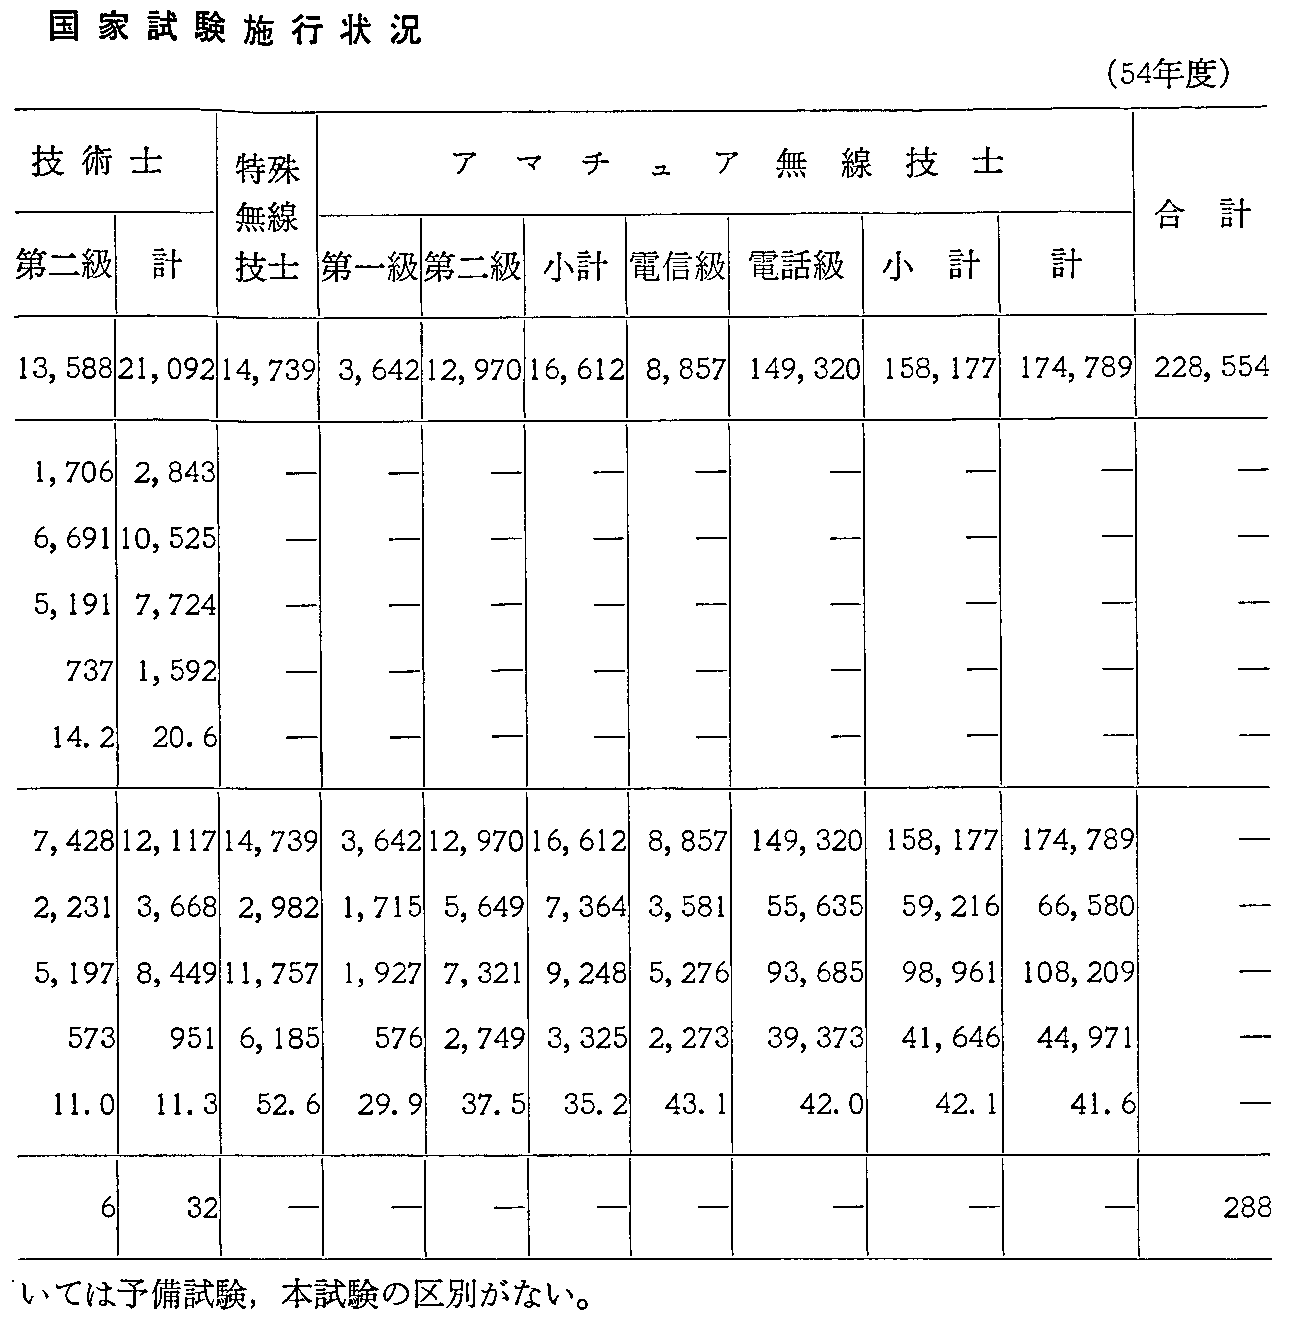 2-6-20\ ]ҍƎ{s(54Nx)(2)